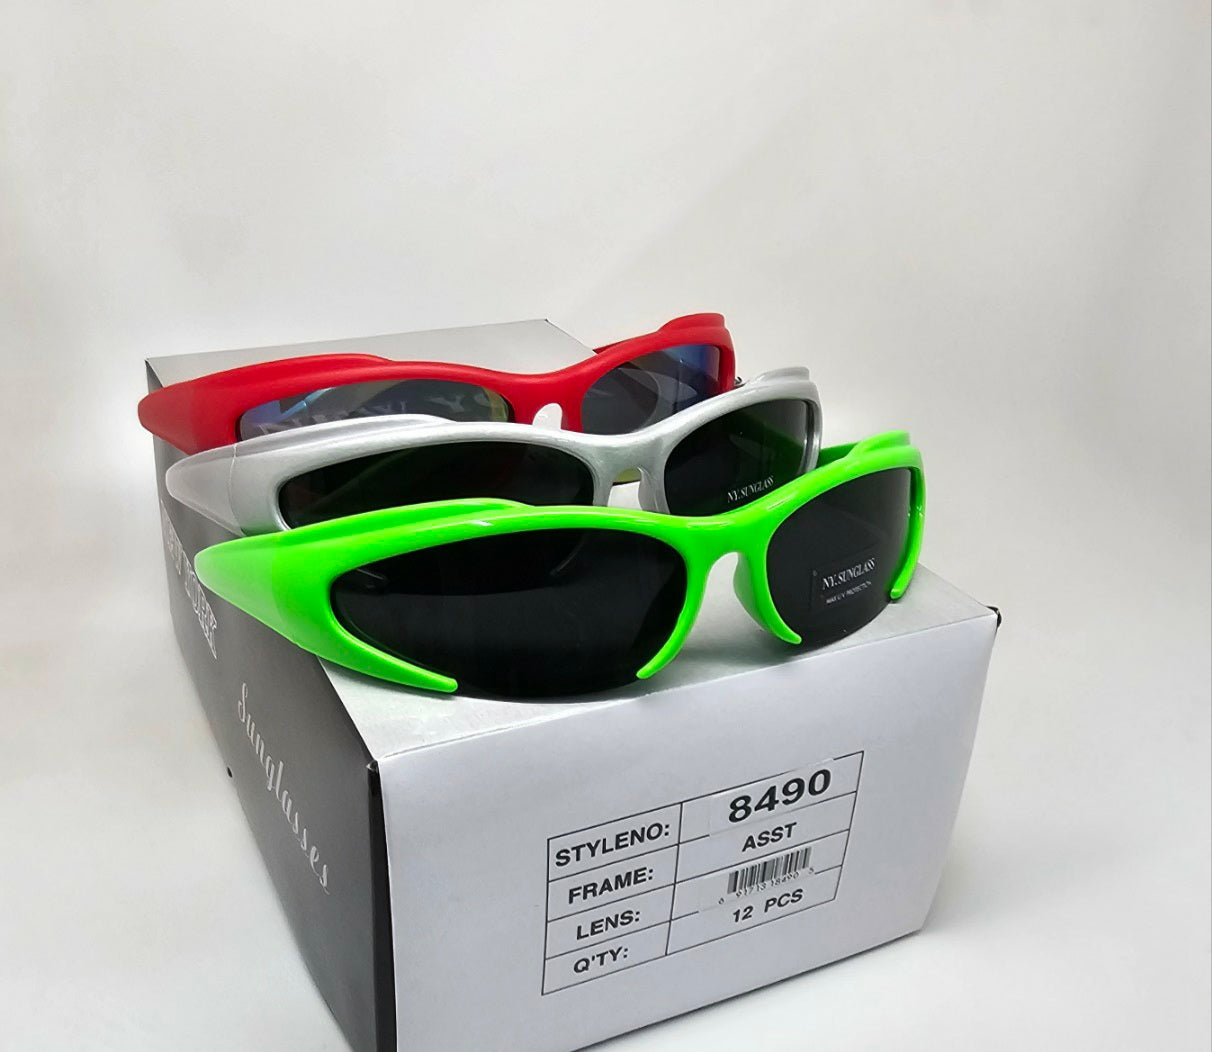 Wholesale Fashion Sunglasses #8490 (12PC)